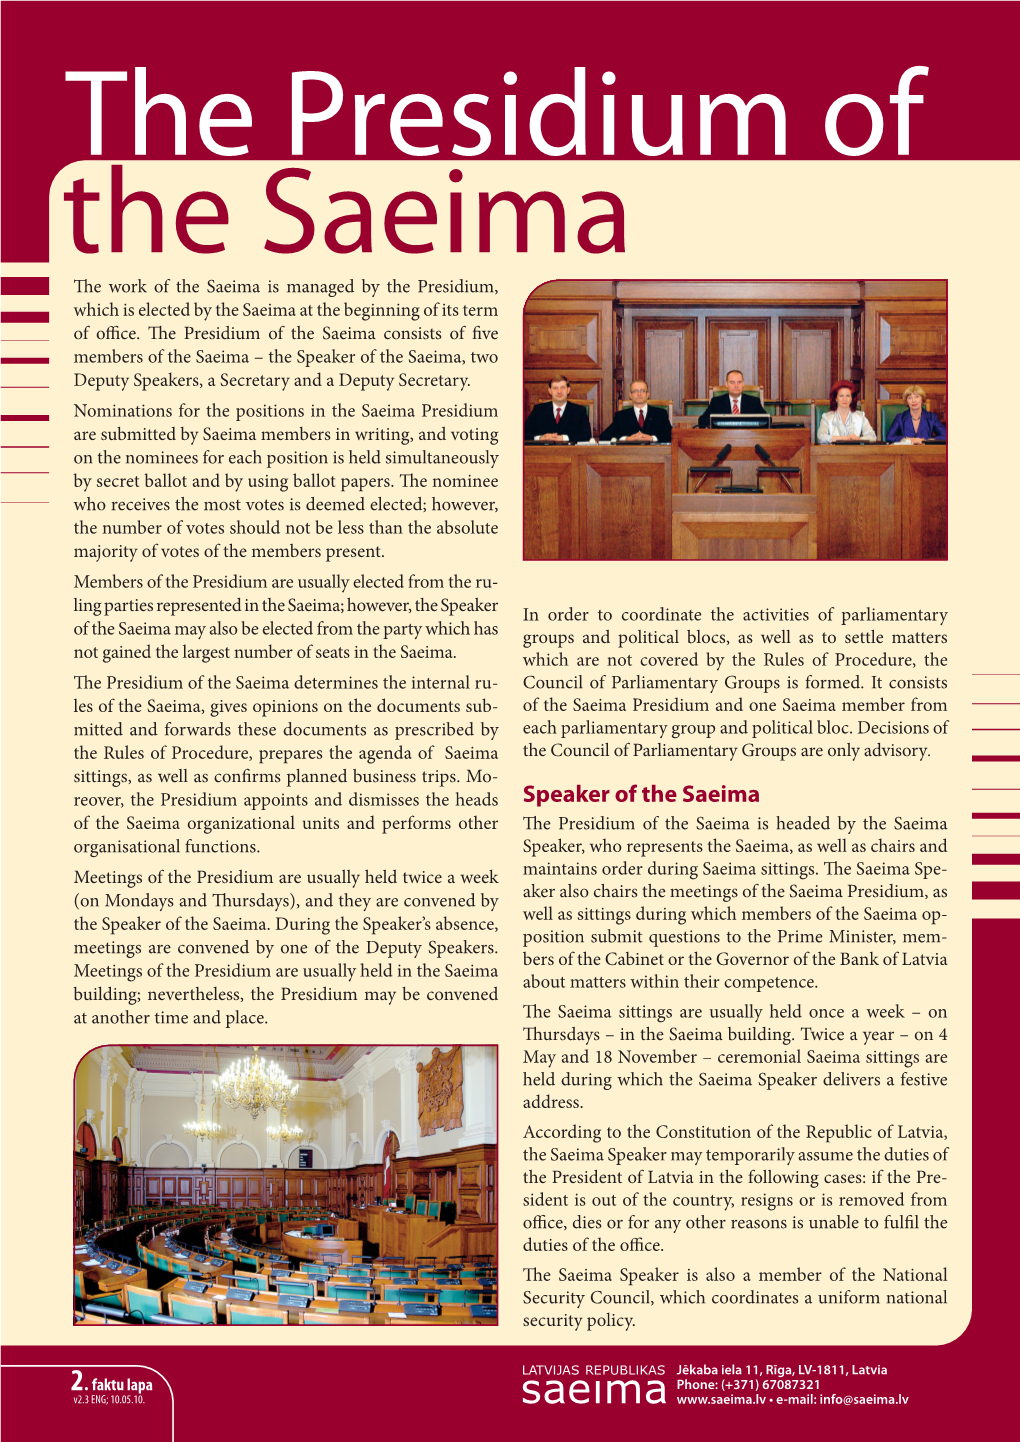 Speaker of the Saeima, Two Deputy Speakers, a Secretary and a Deputy Secretary